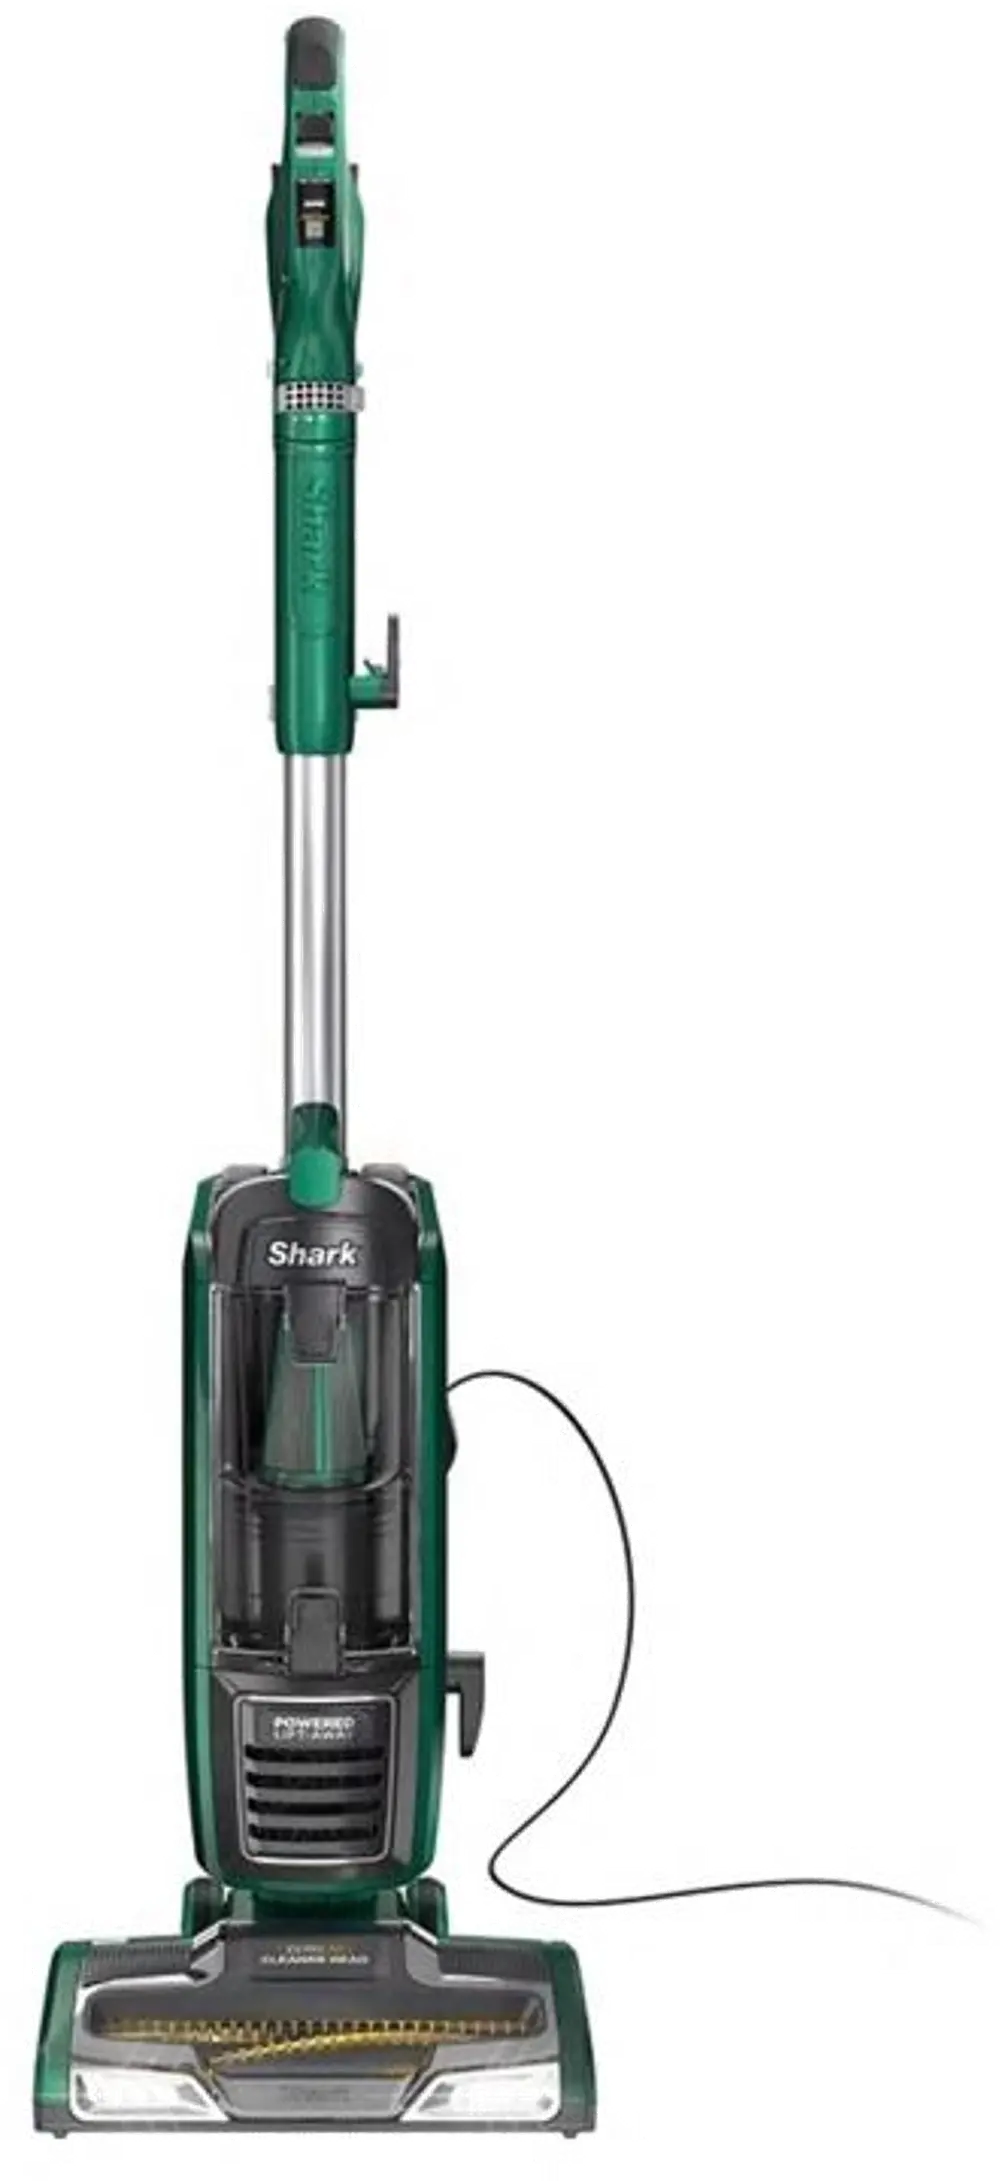 .ZU621/POWR_LIFTAWAY Shark Rotator Powered Lift-Away Upright Vacuum with Self-Cleaning Brushroll-1